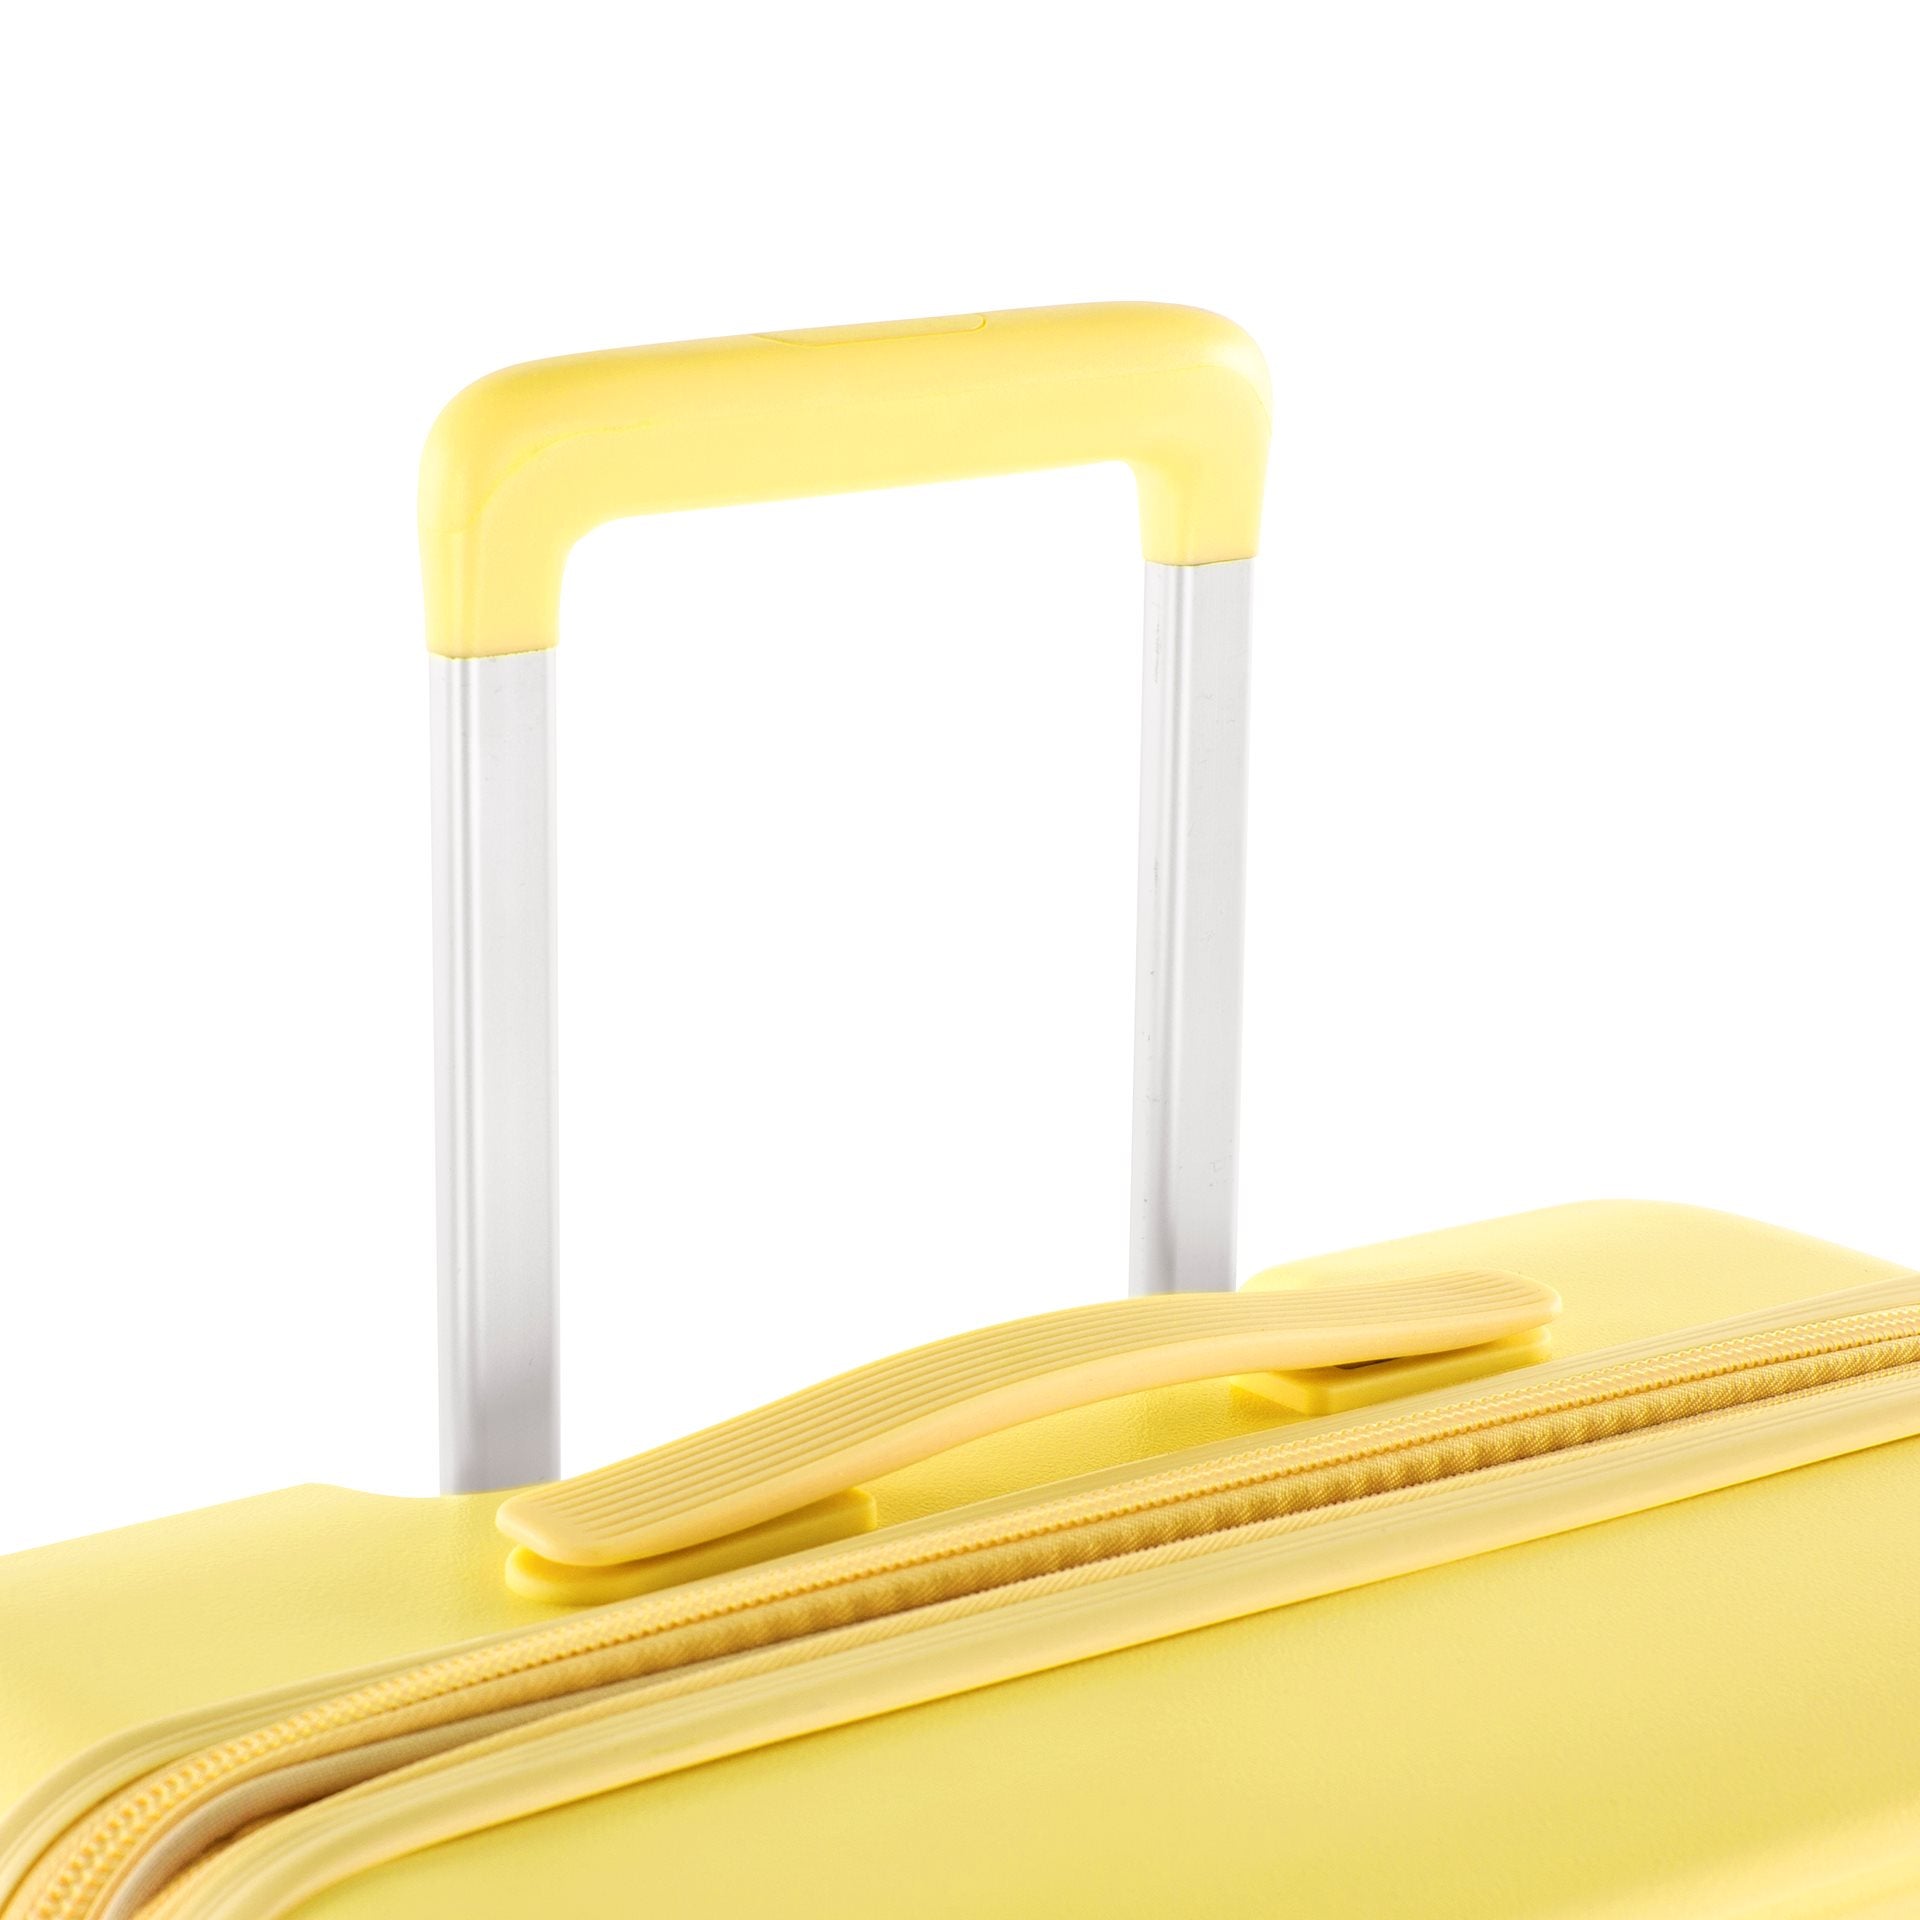 Heys Pastel Koffer - 21" (53 cm)  - Yellow Handbagage Koffer - Reisartikelen-nl